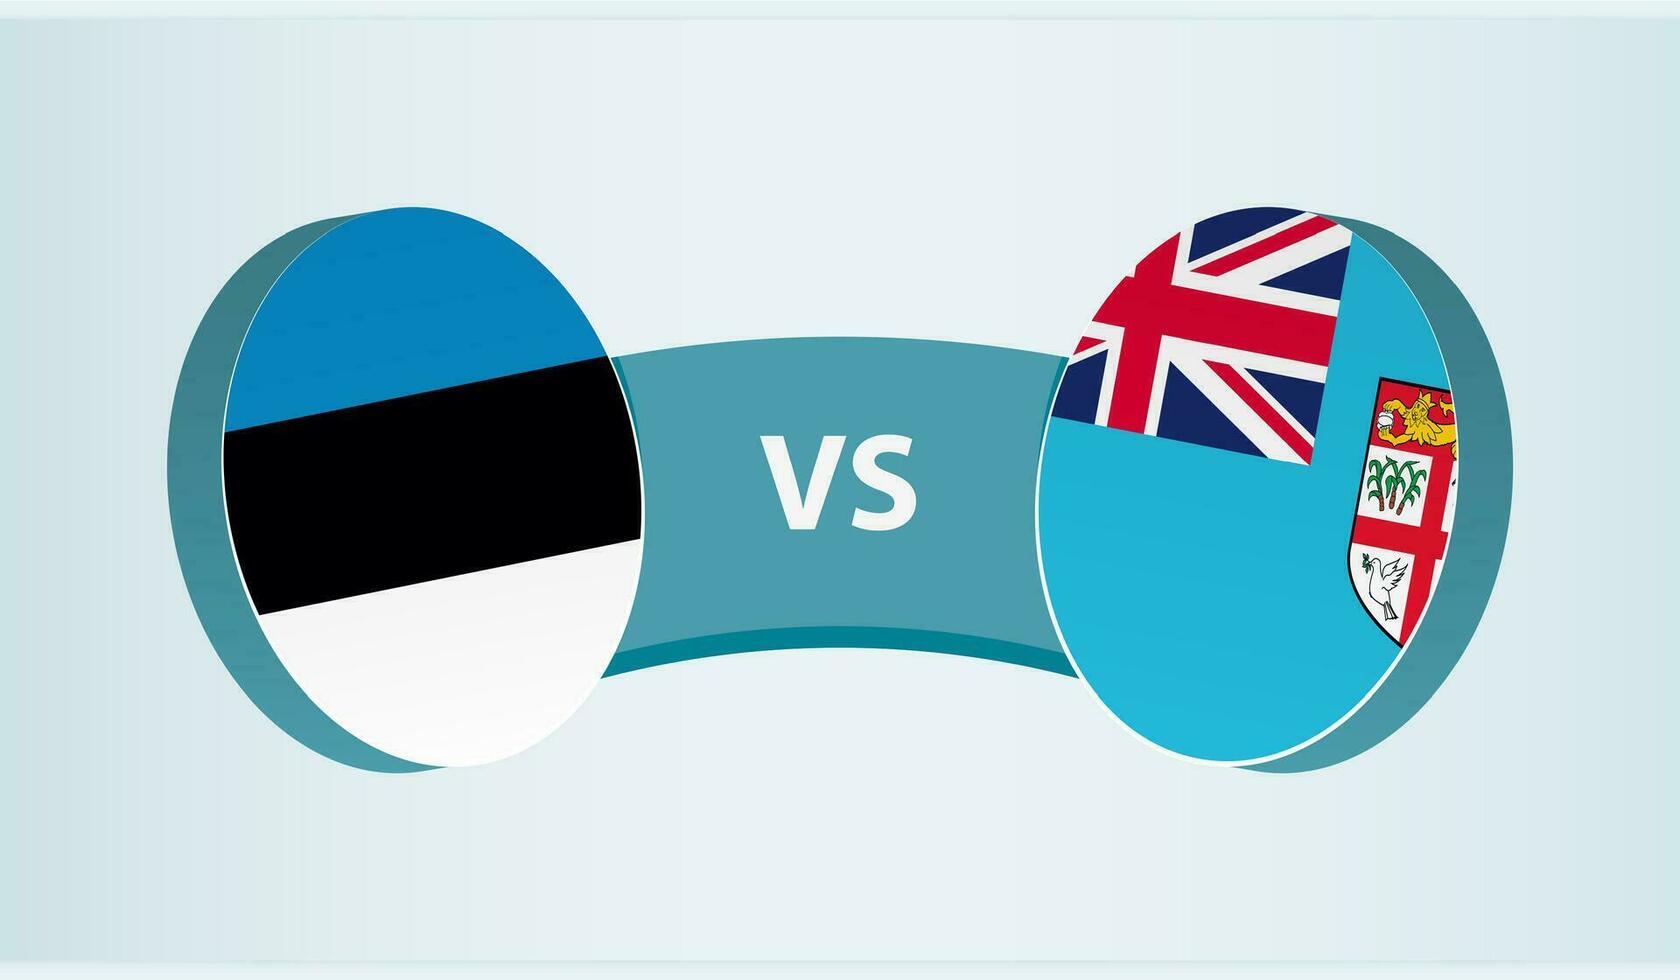 Estonia versus Fiji, team sports competition concept. vector